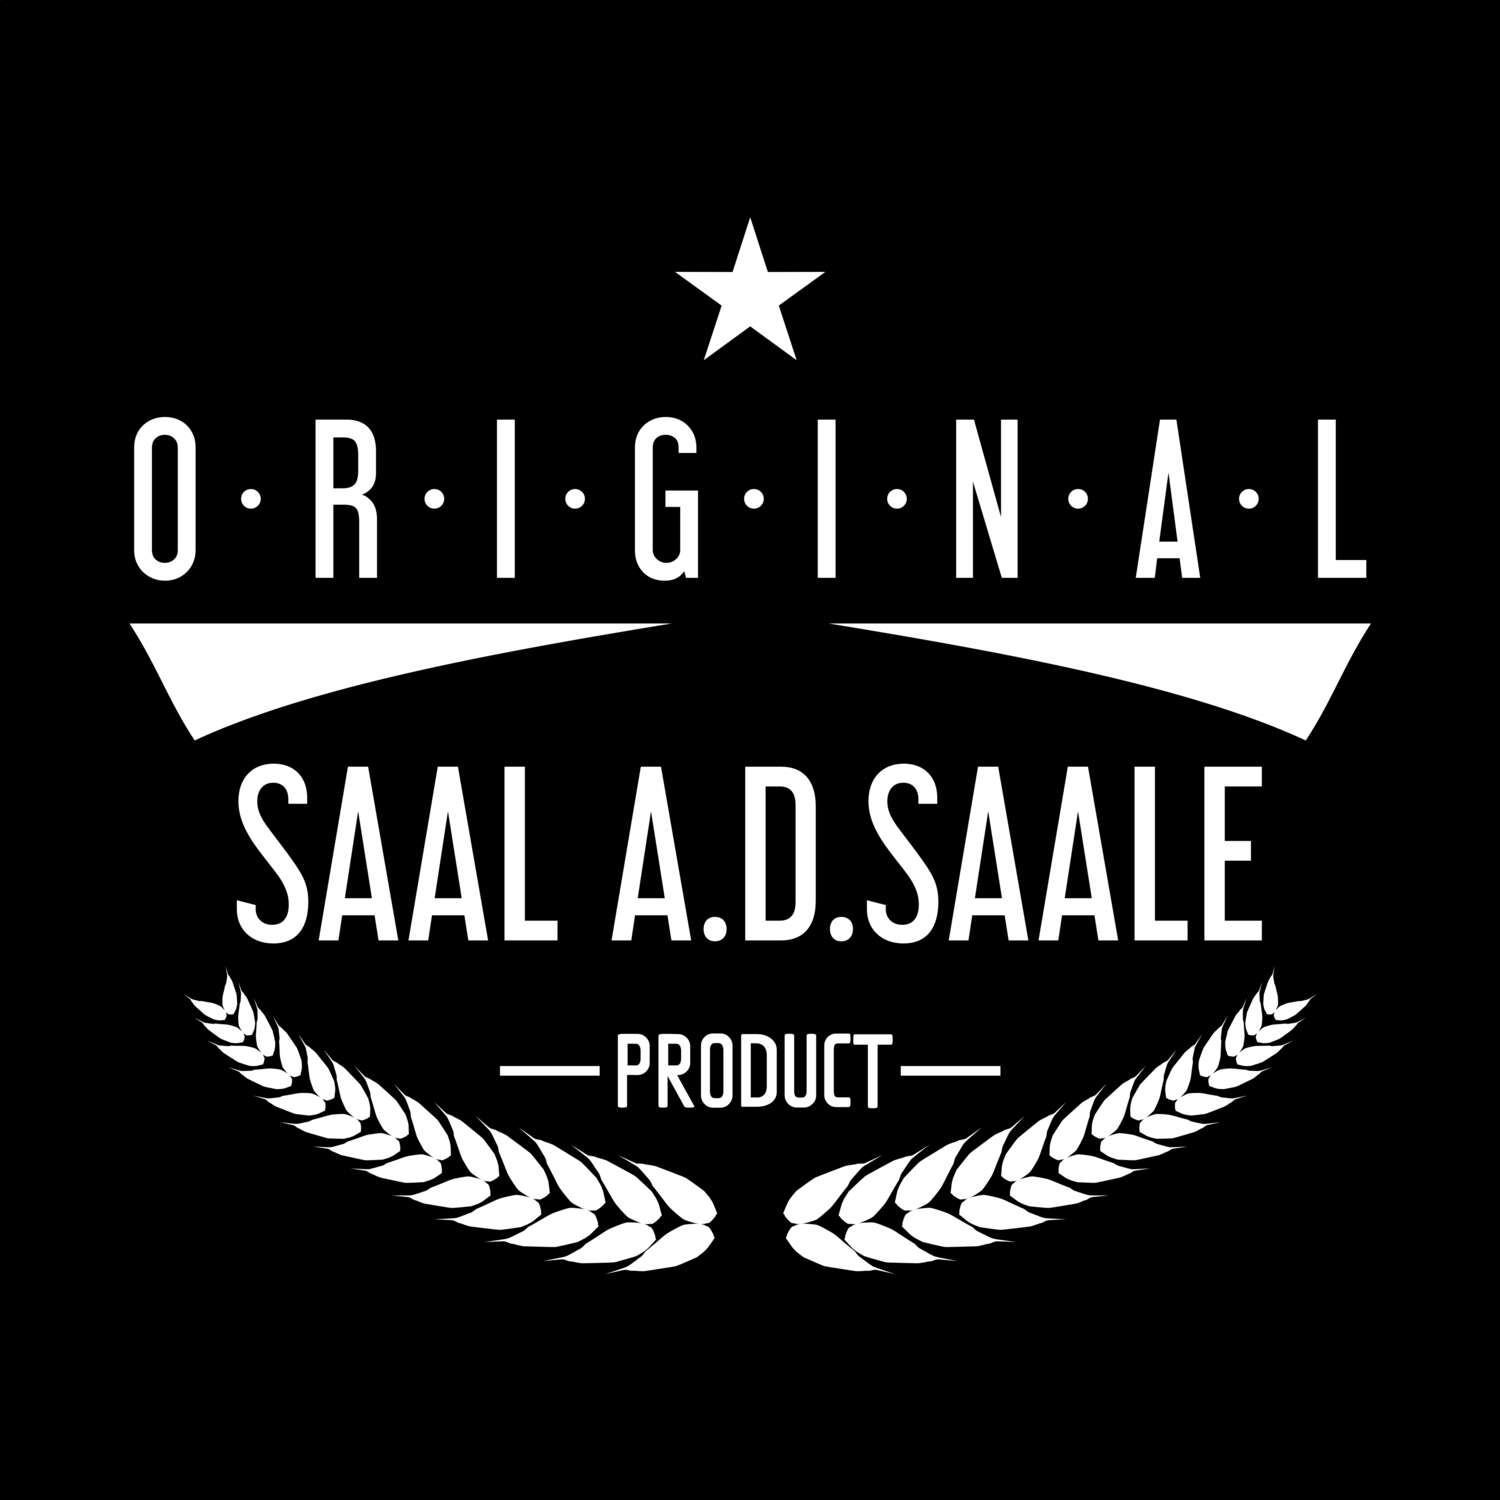 Saal a.d.Saale T-Shirt »Original Product«